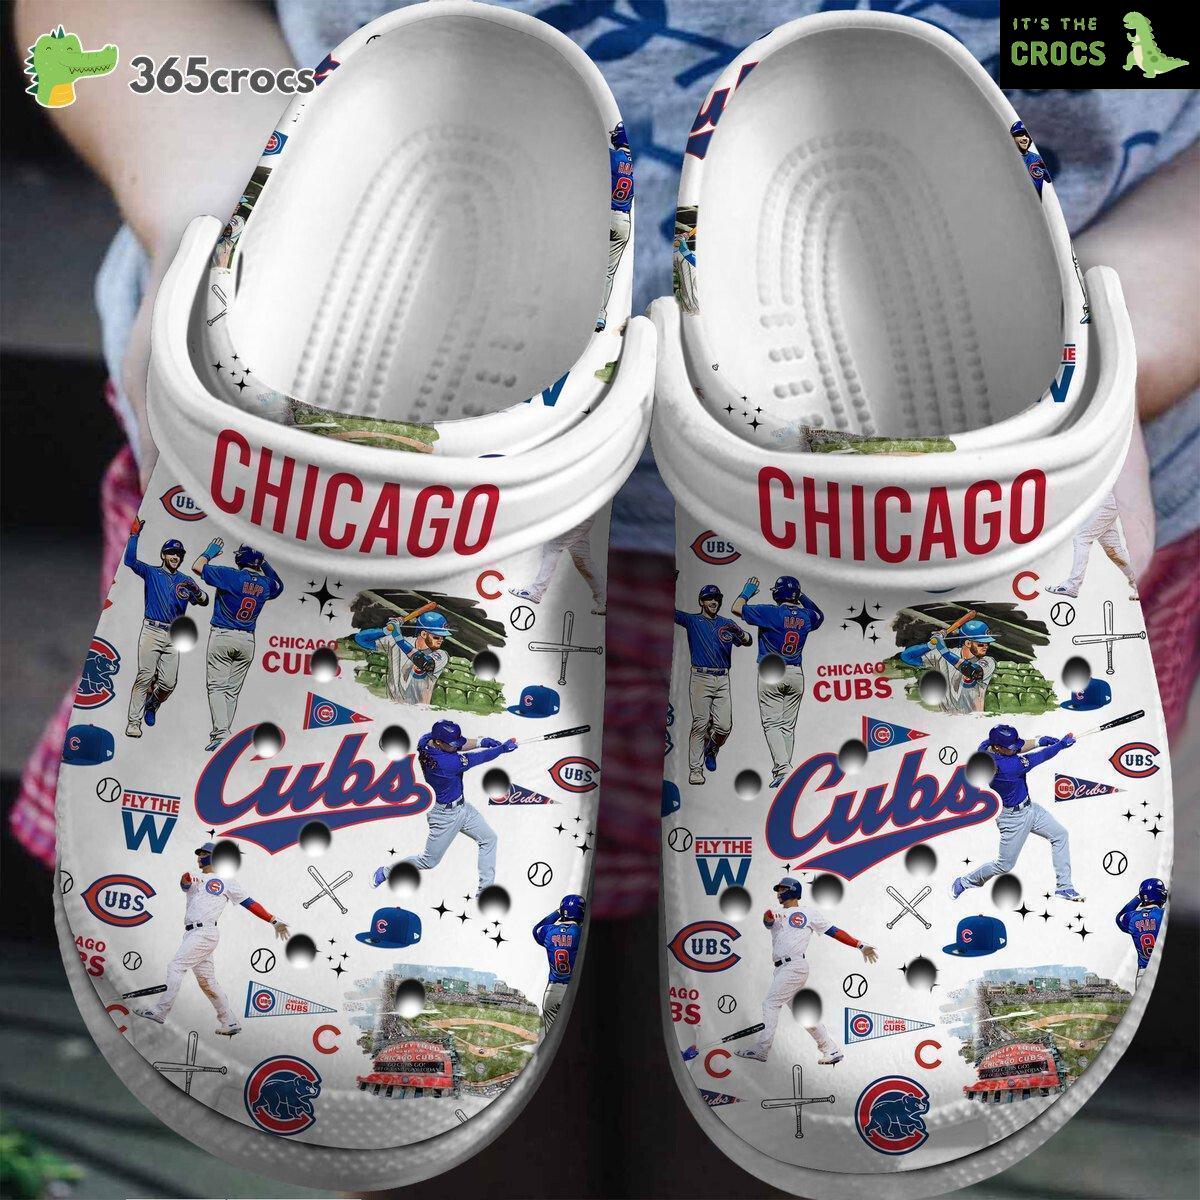 Chicago Cubs MLB Sports Fans Ultimate Comfort Crocs Clogs Footwear Design